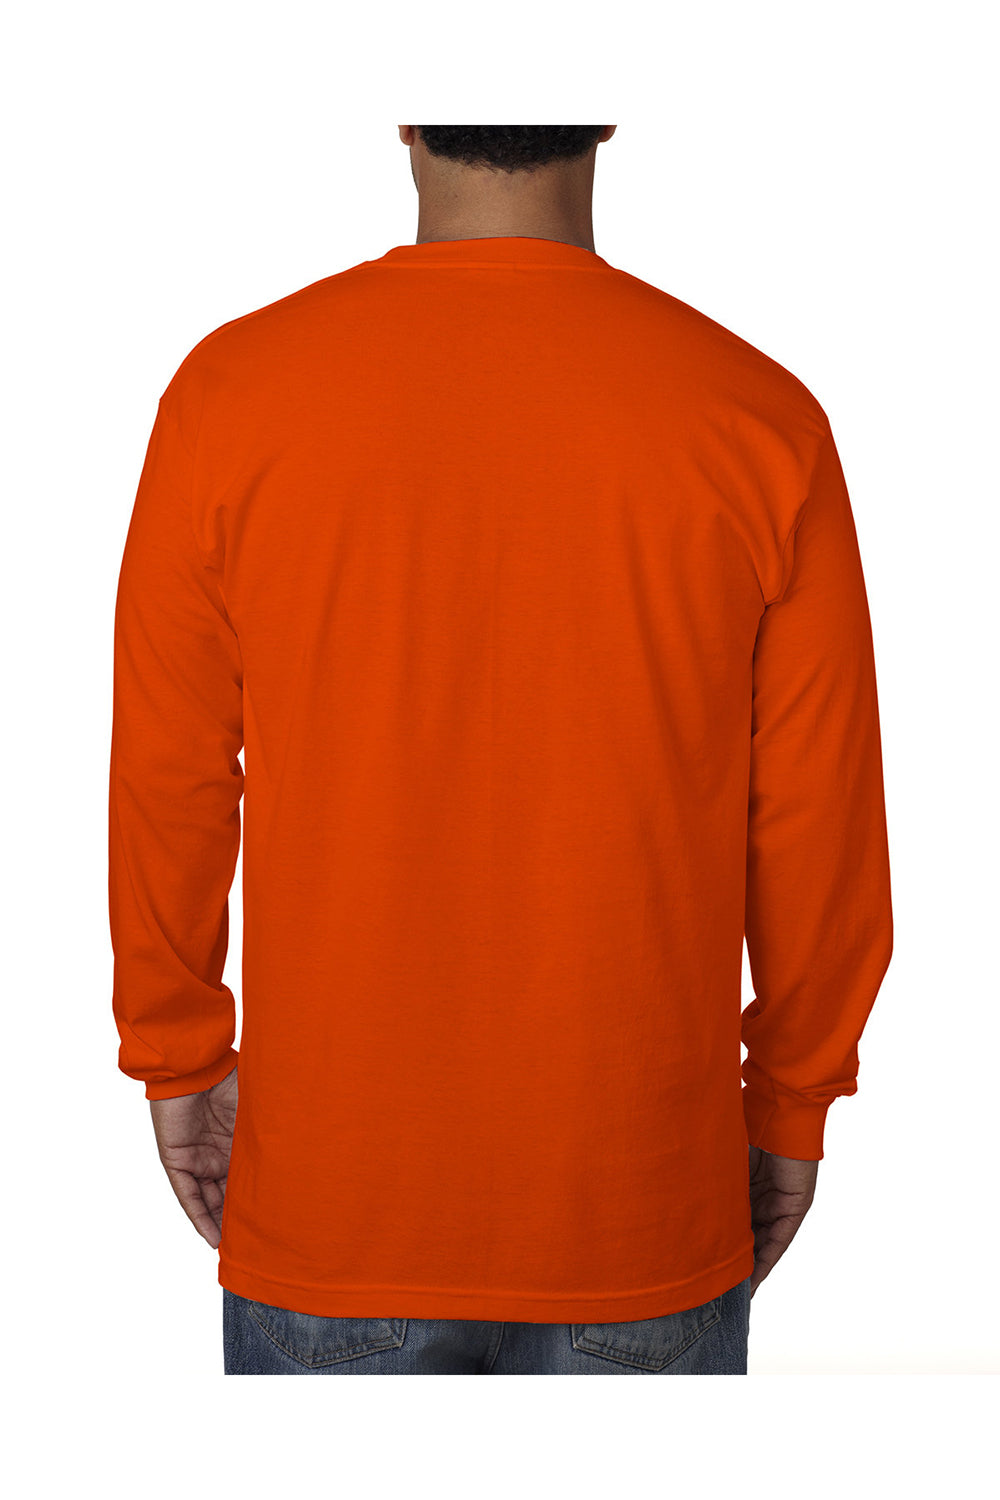 Bayside BA5060 Mens USA Made Long Sleeve Crewneck T-Shirt Bright Orange Model Back